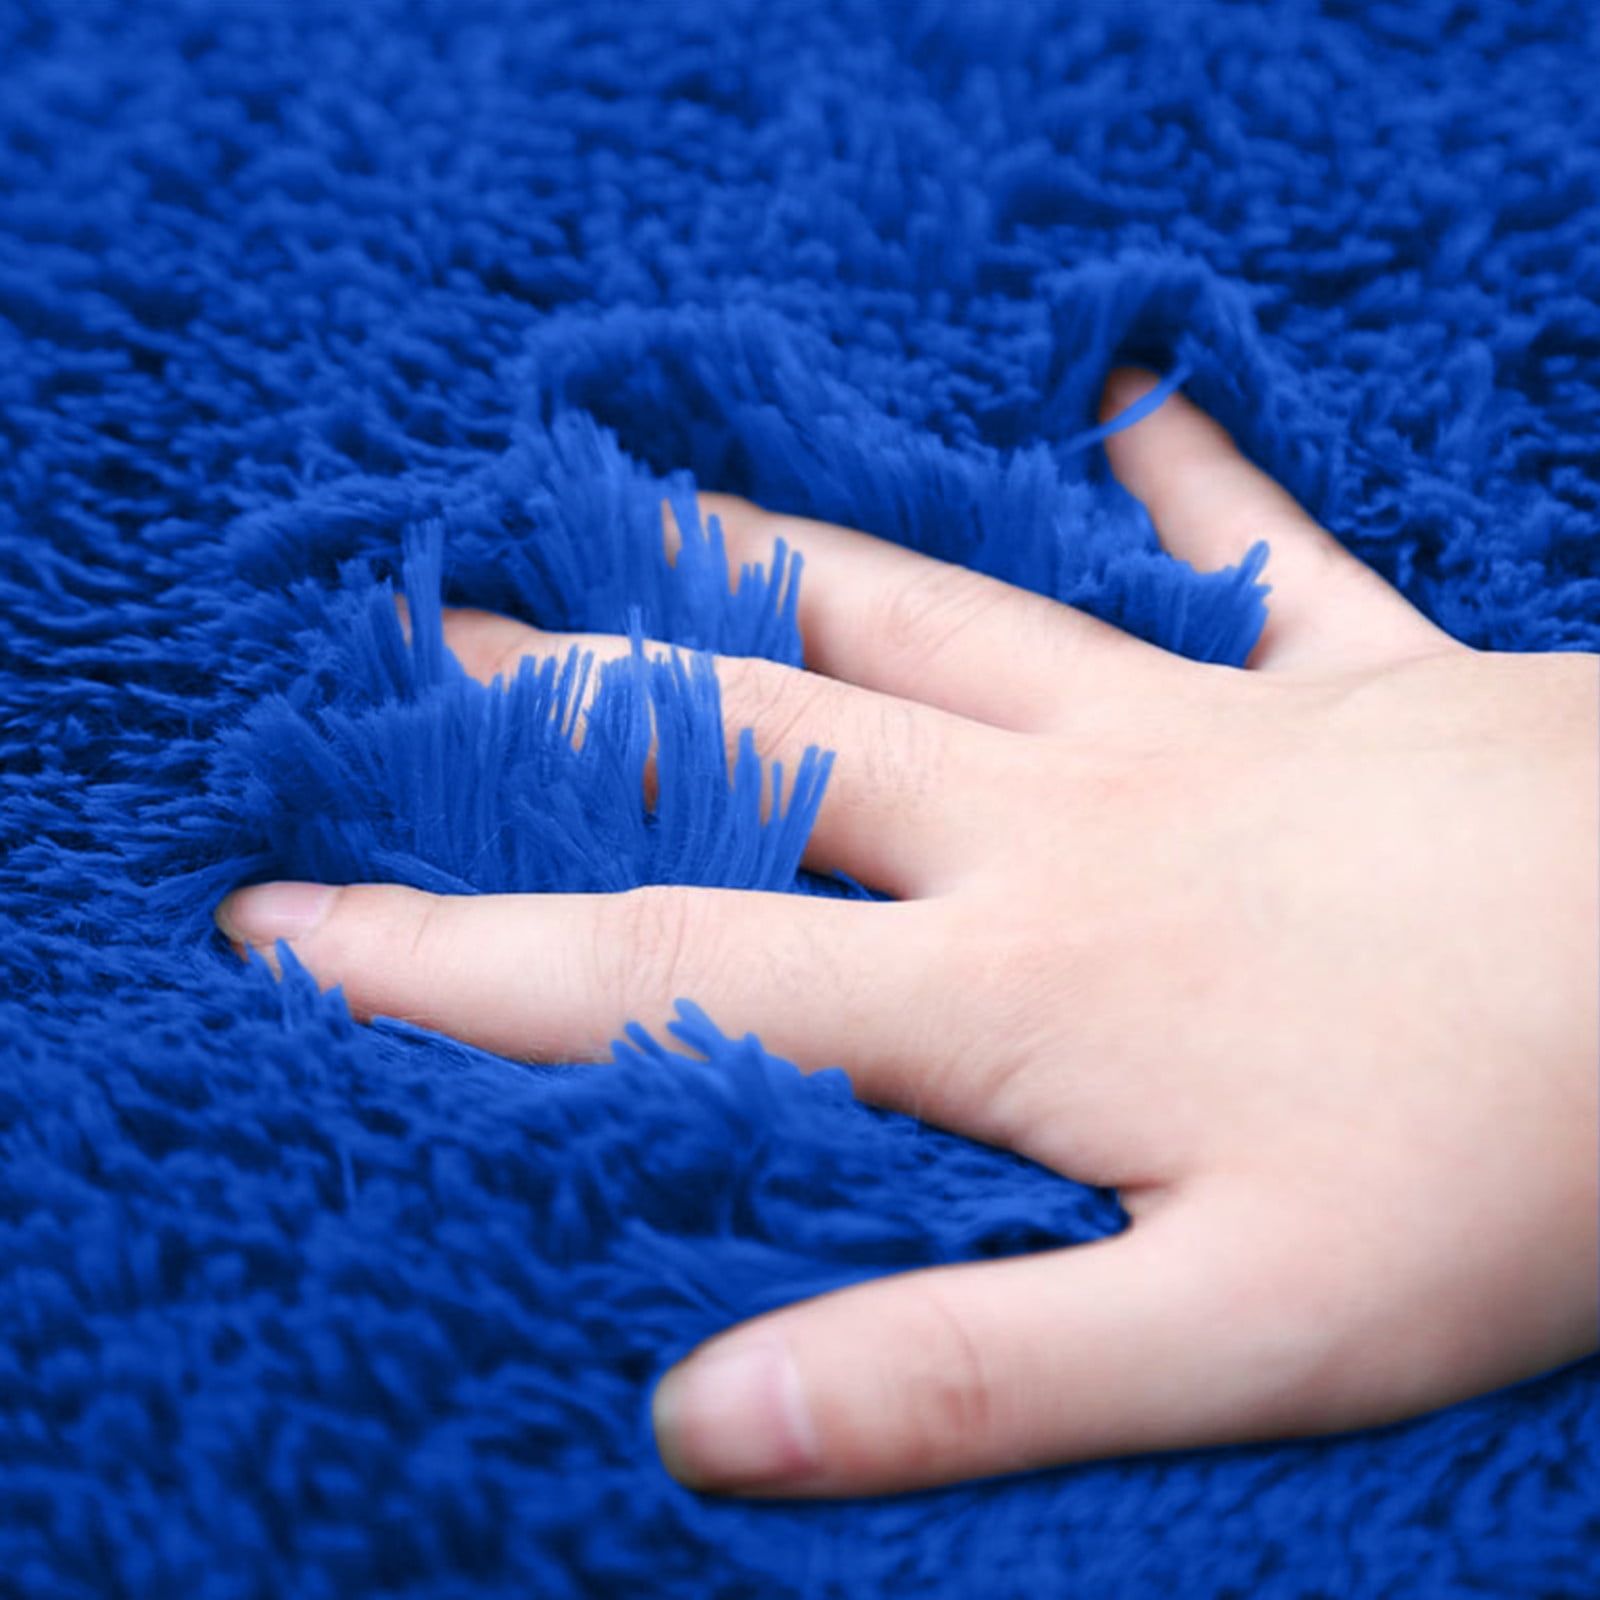 Home Textiles Clearance 3PC Bathroom Rug Set Bathroom Toilet Carpet Anti-Slip  Mat Floor Mat Blue 